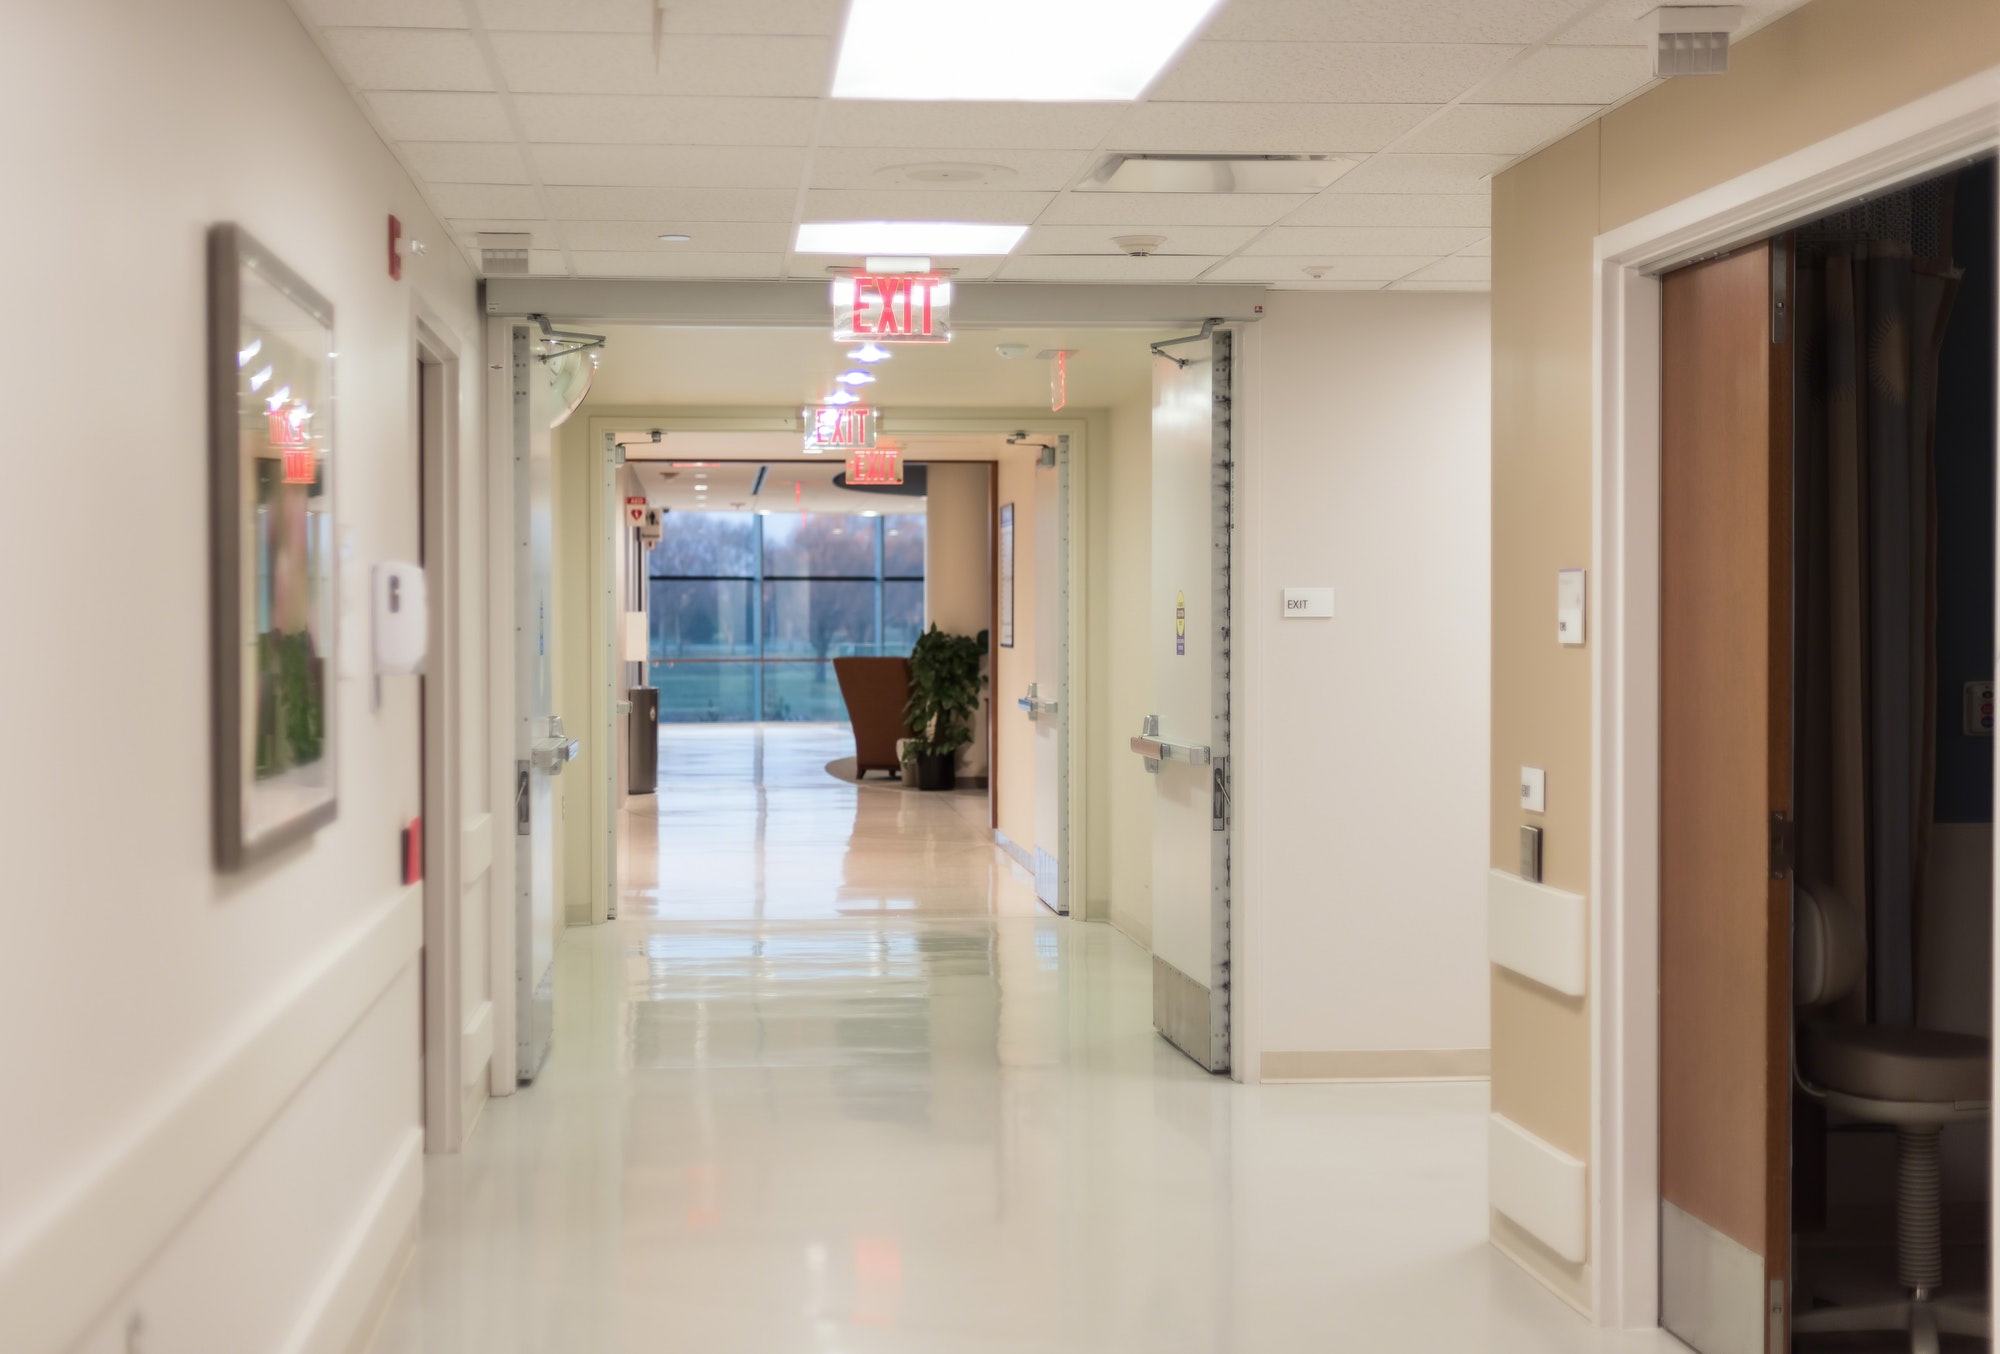 Sterile hospital corridor